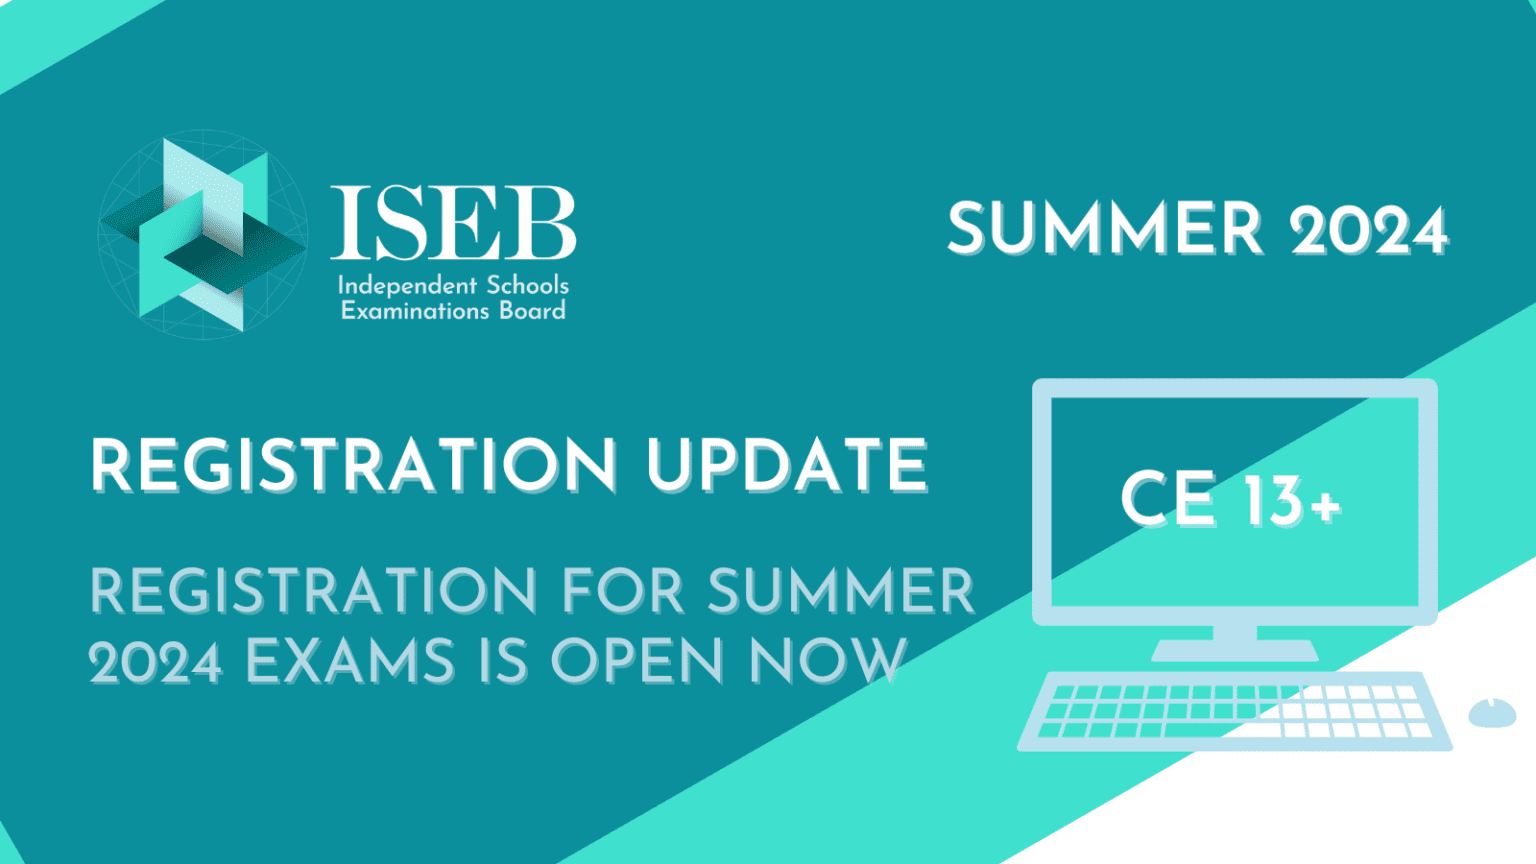 CE 13+ Exam Registration for Summer 2024 ISEB